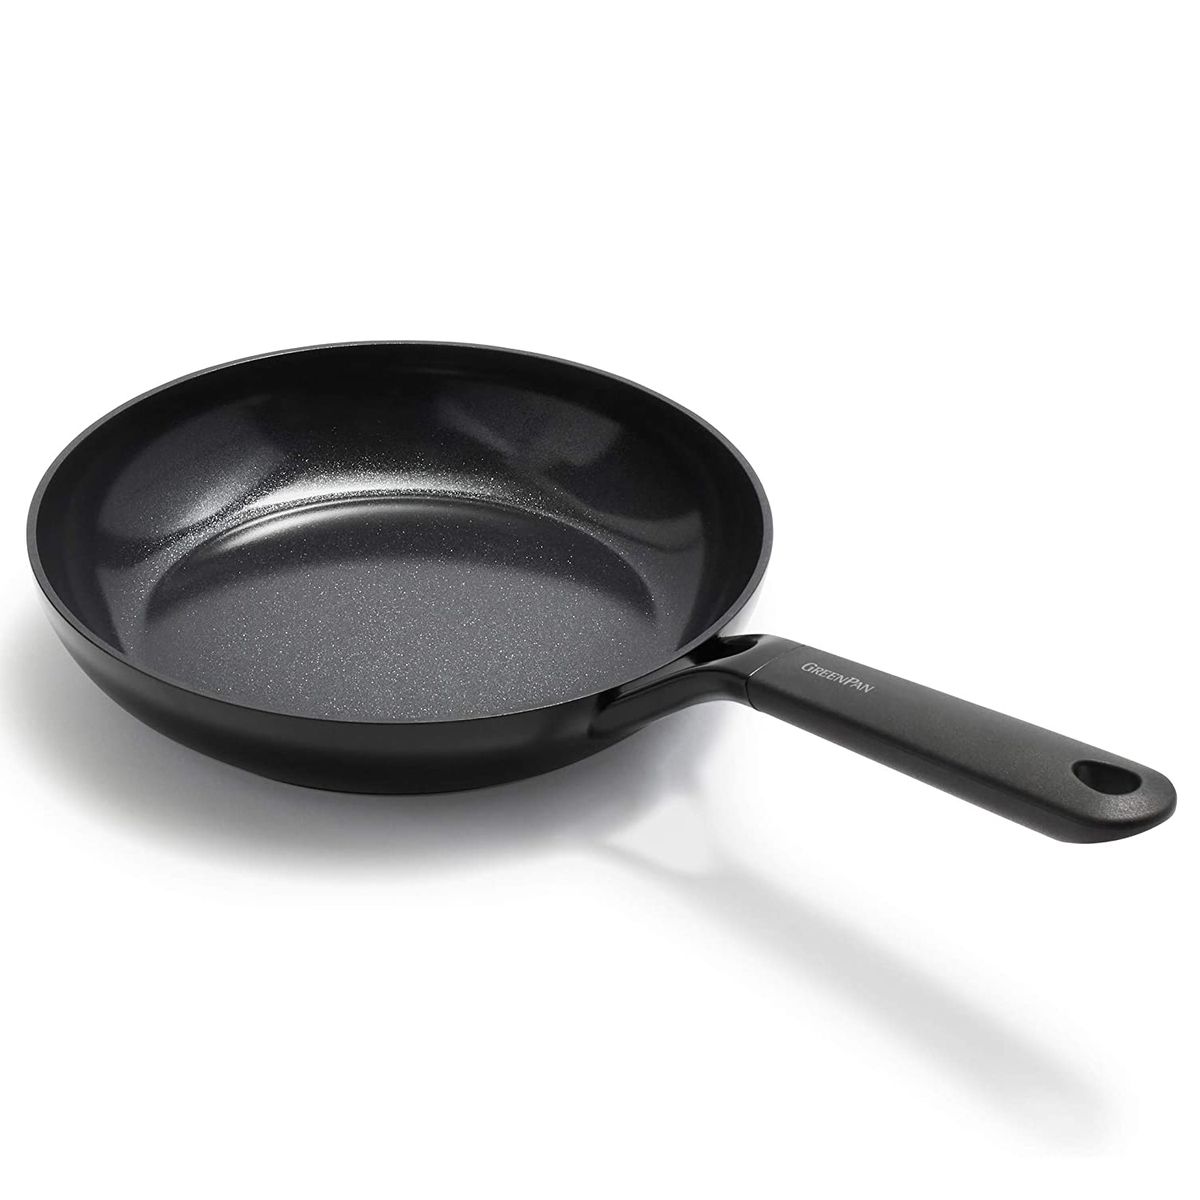 Cast Iron Skillet Frying Pan